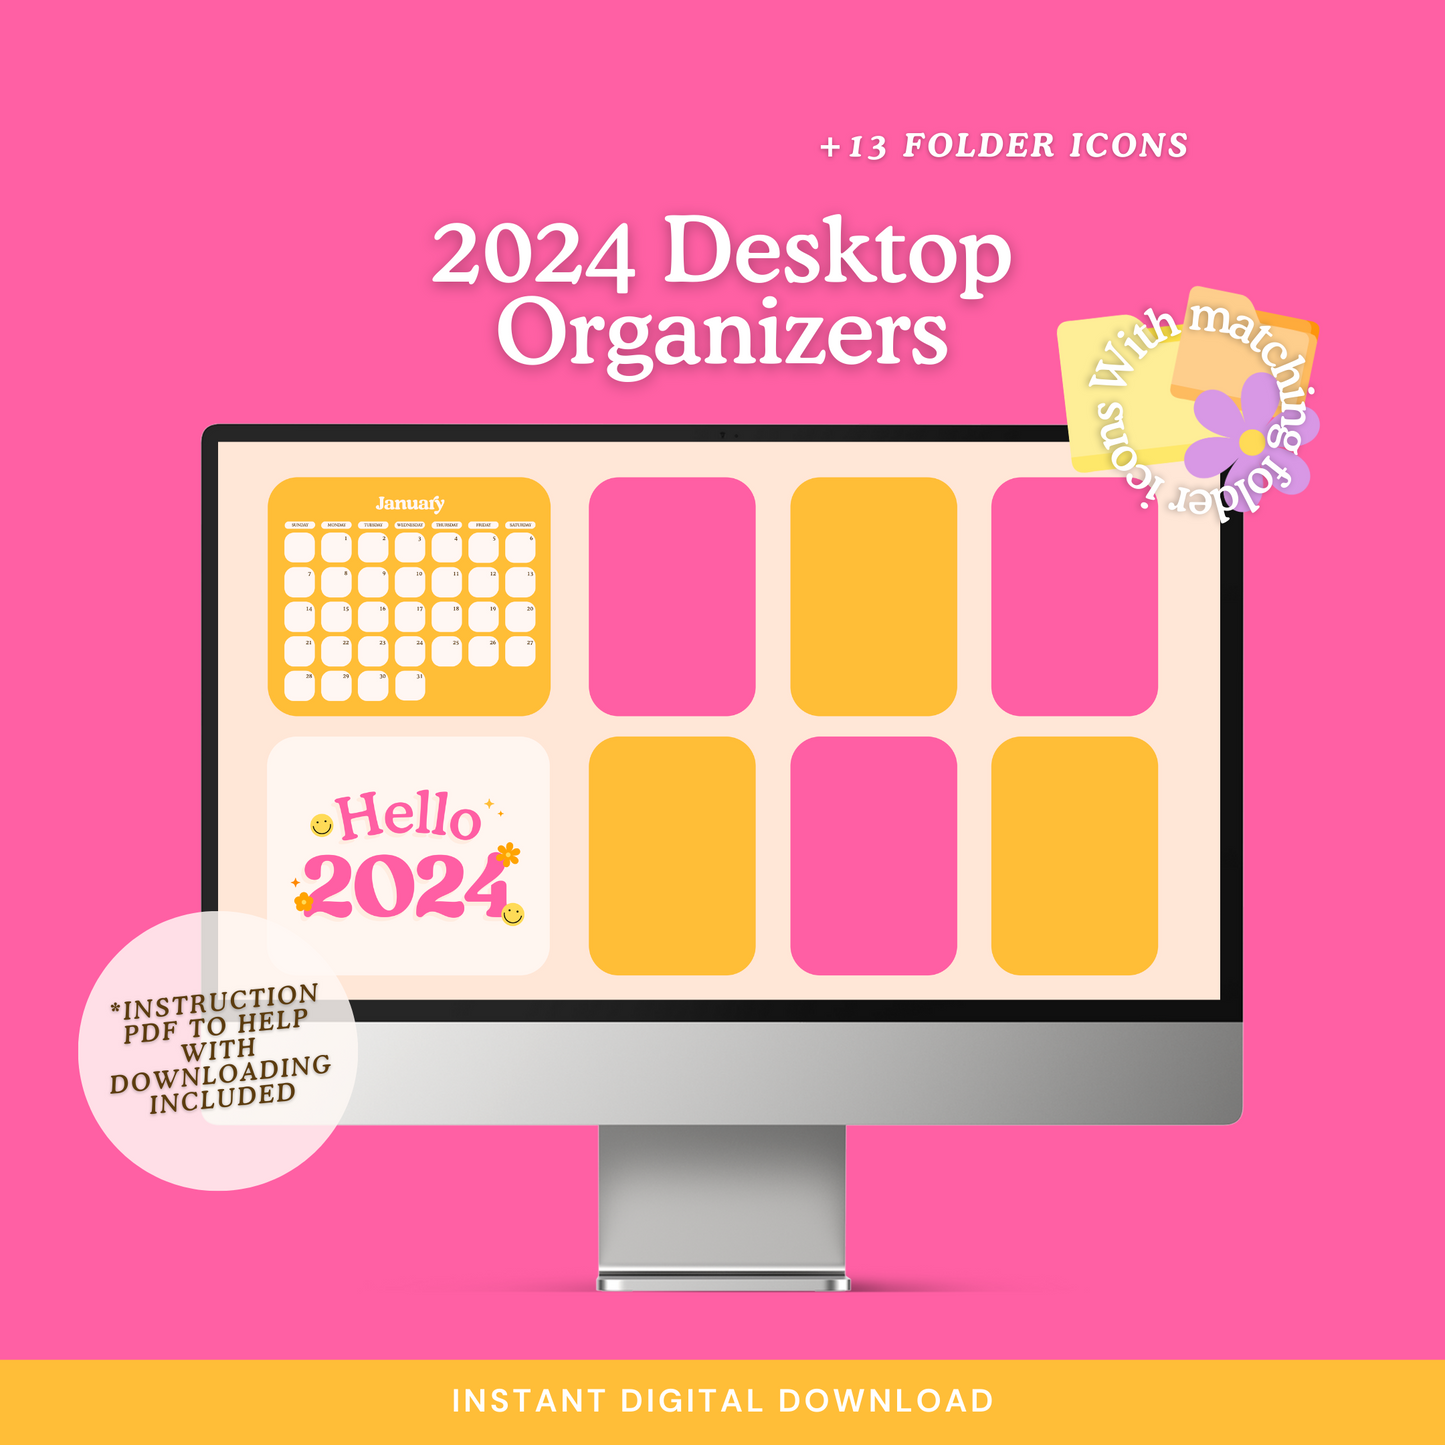 2024 Desktop Organizer + Folder Icons